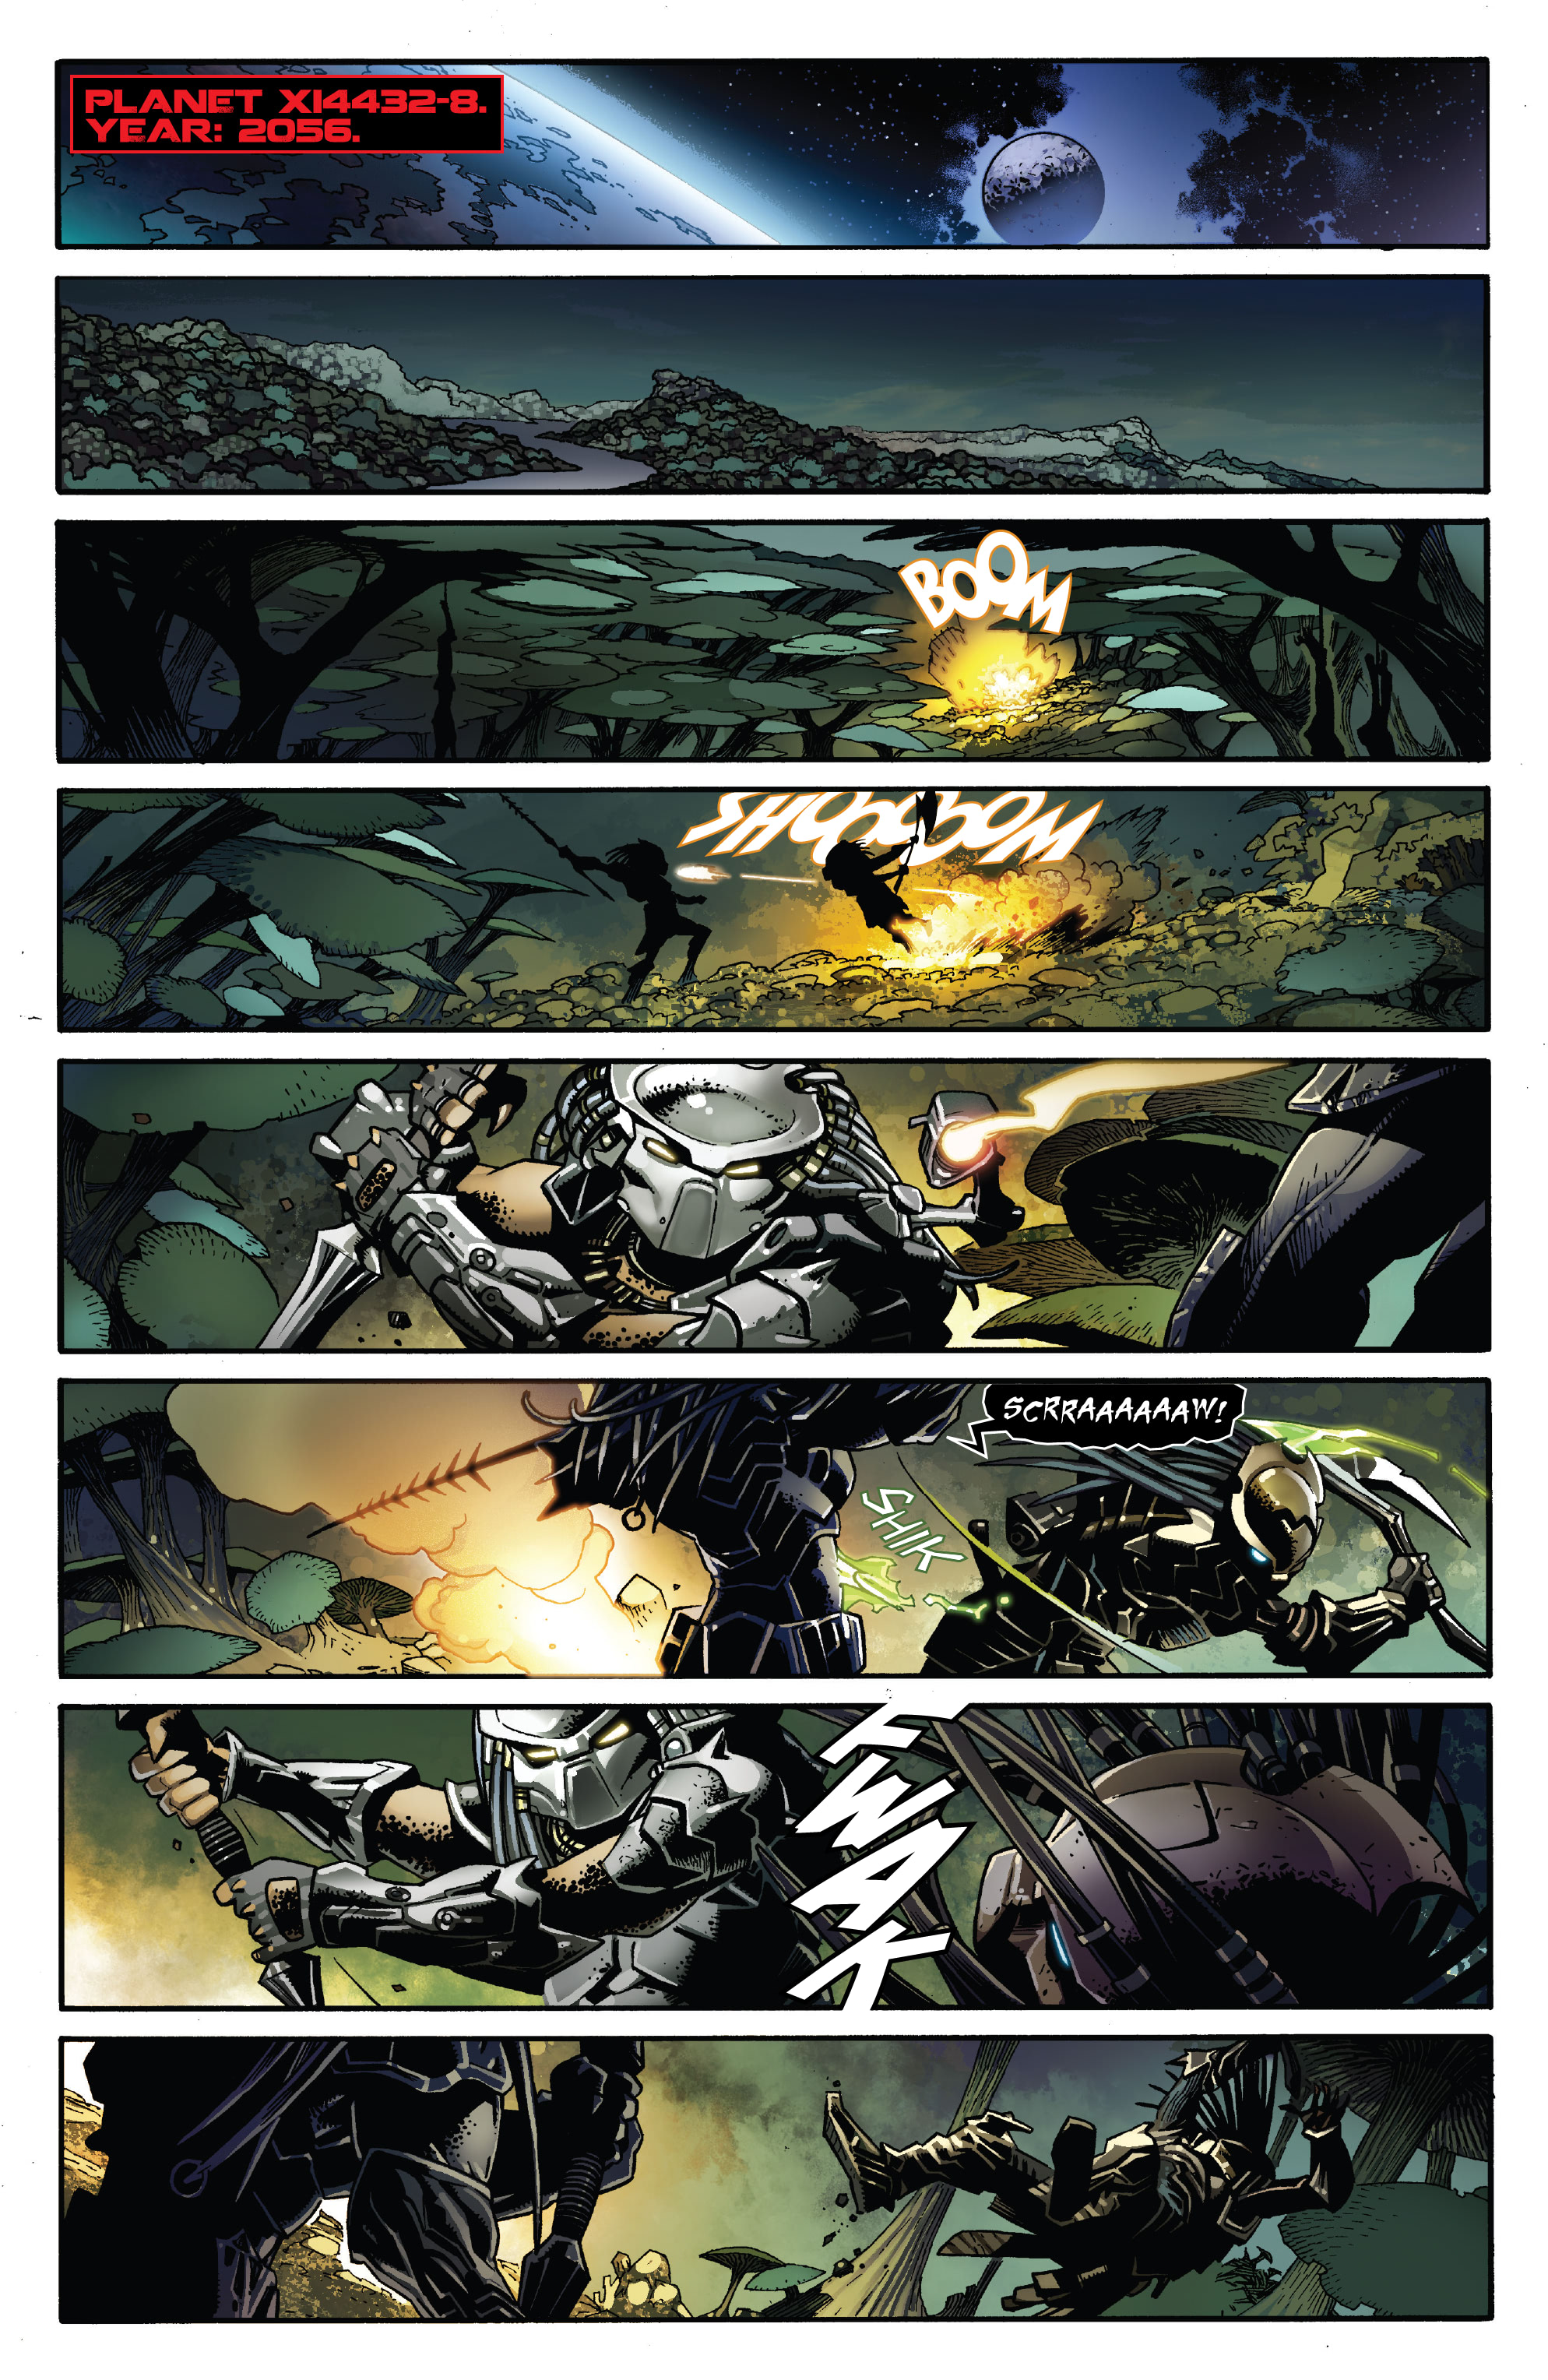 Predator (2022-): Chapter 1 - Page 2